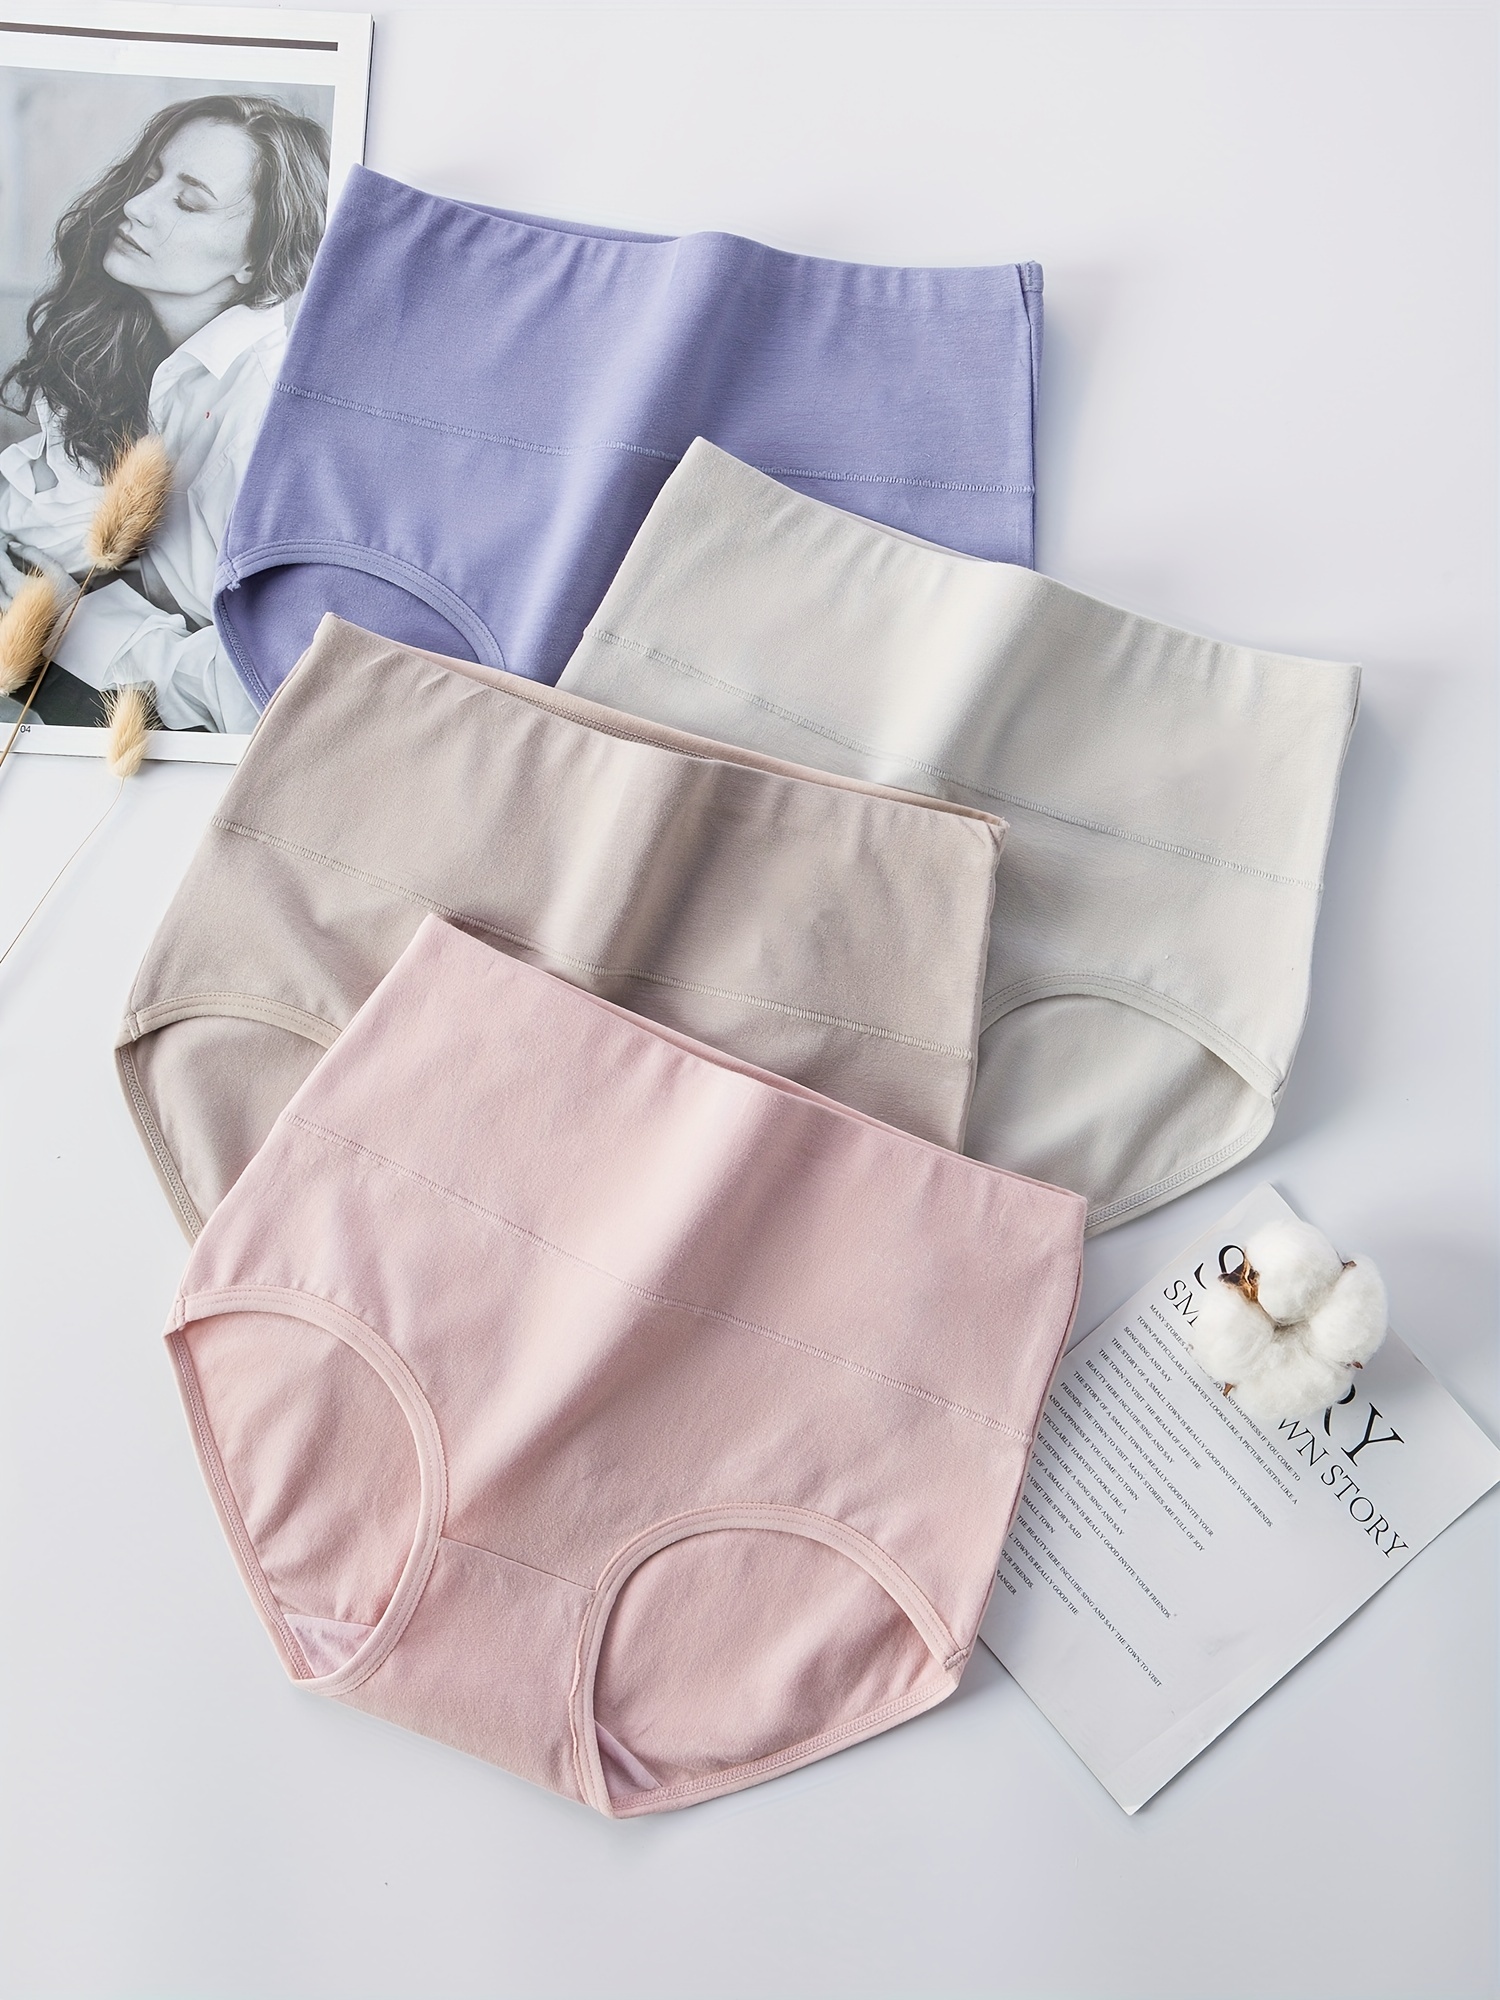 4pcs Mixed Color Briefs, Soft & Breathable High Waist Intimates Panties,  Women's Lingerie & Underwear